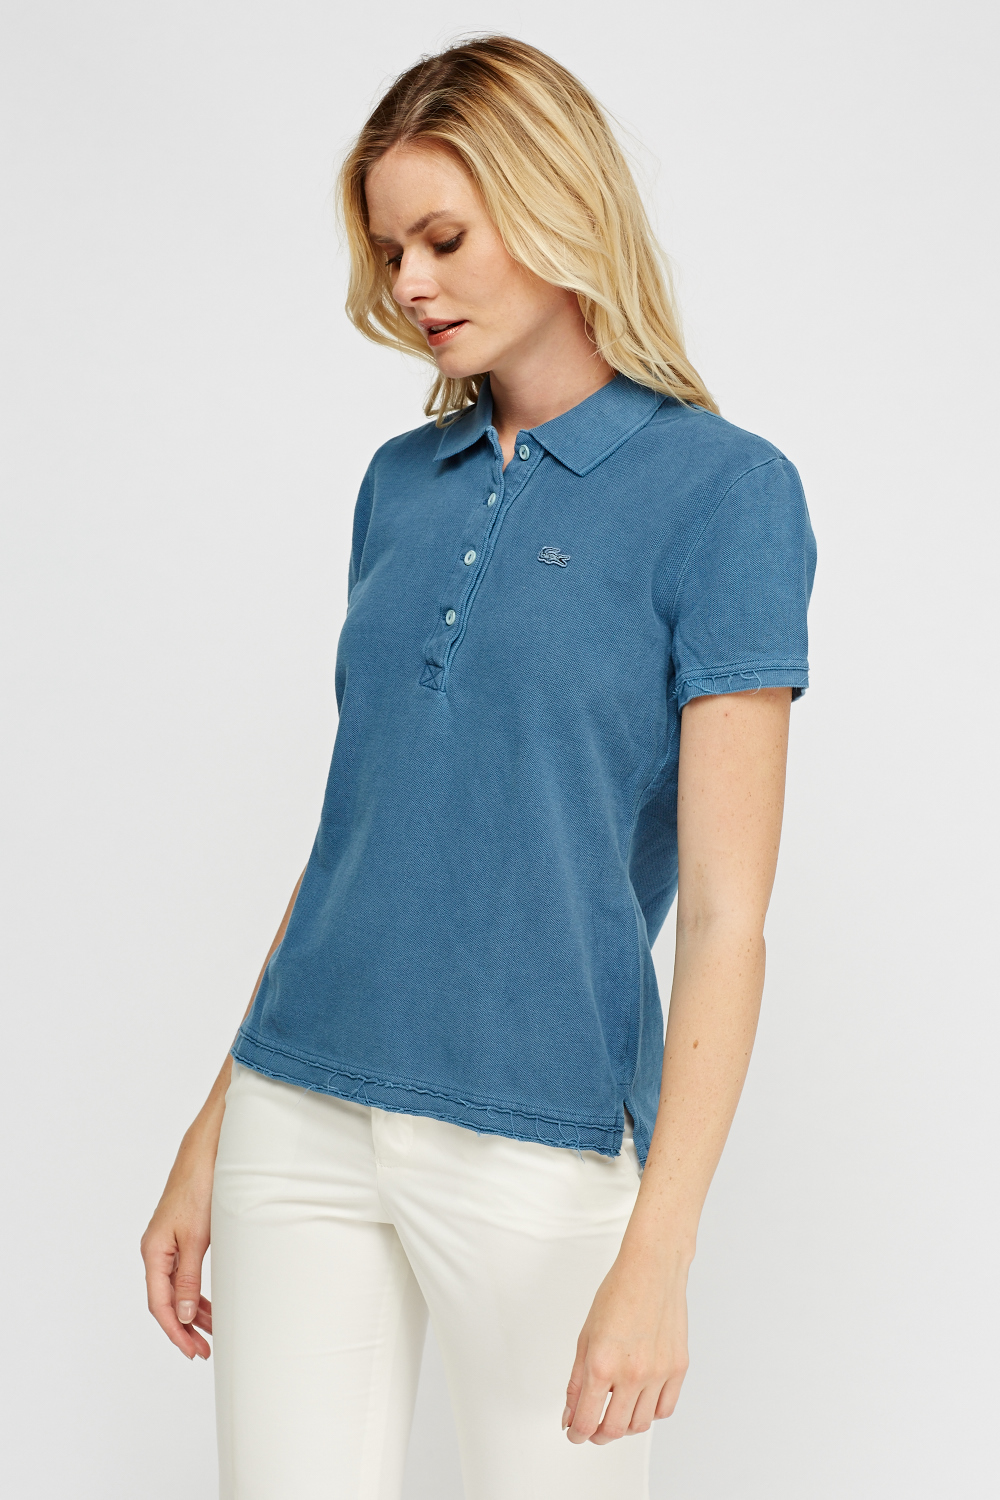 Lacoste Indigo Polo T- Shirt - Just $78